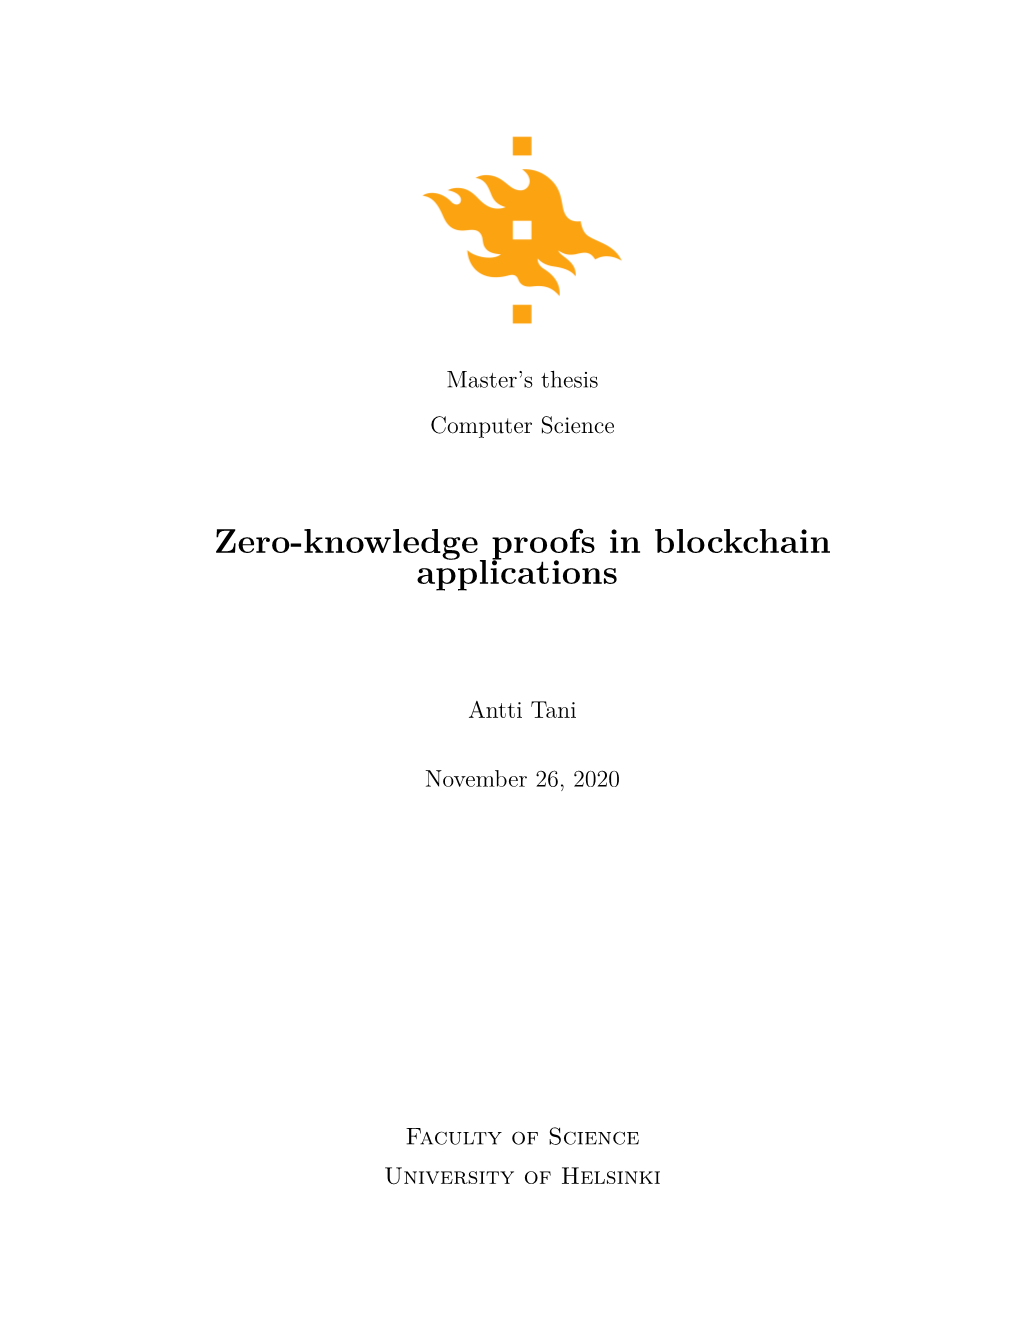 Zero-Knowledge Proofs in Blockchain Applications